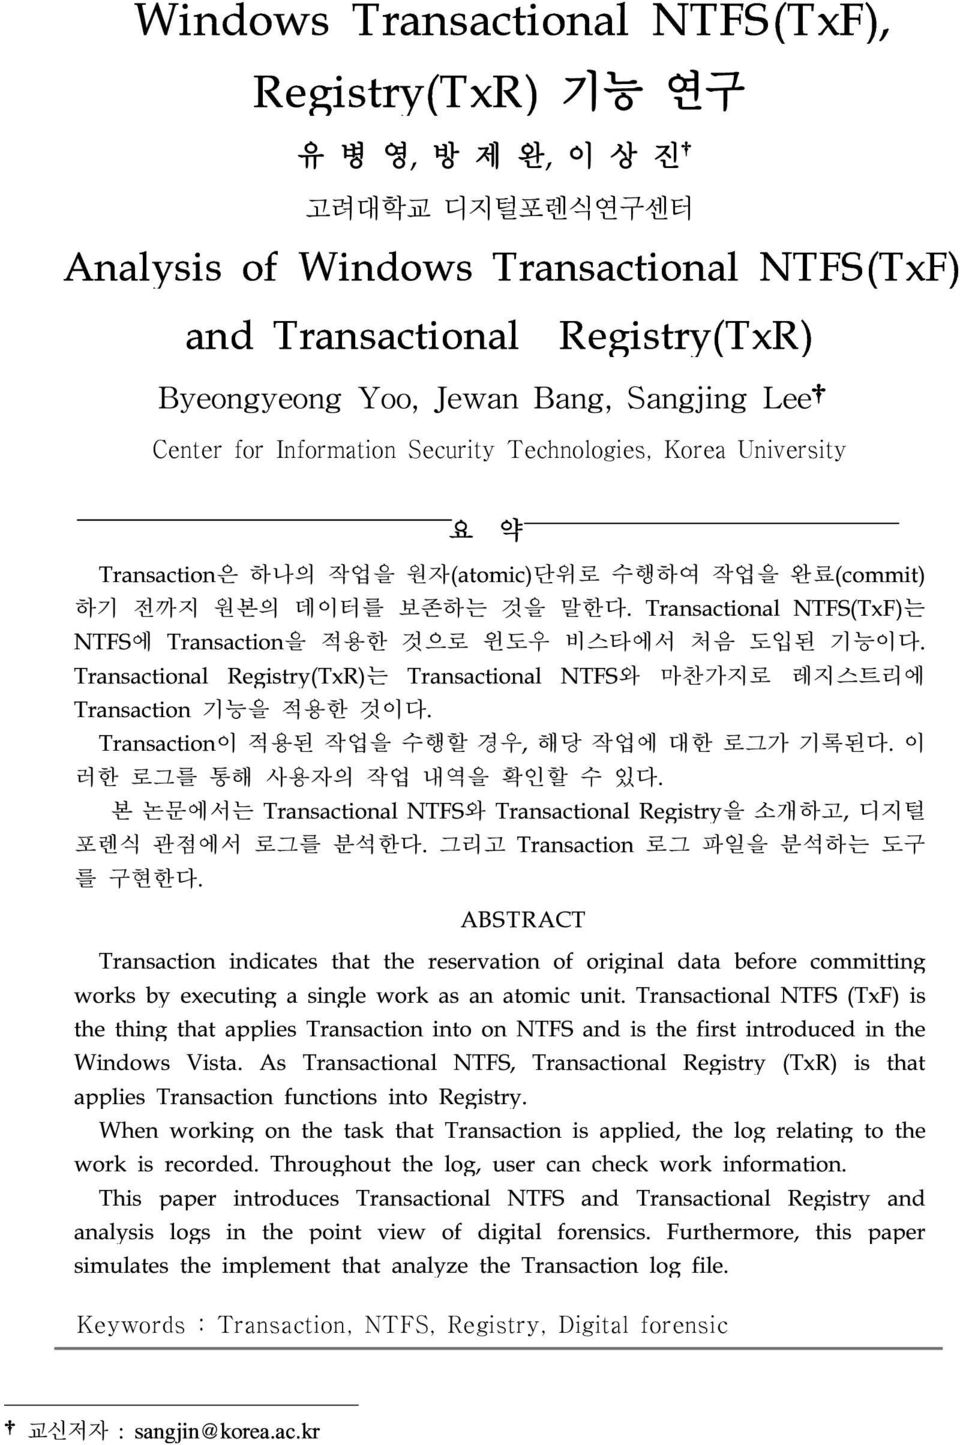 Transactional NTFS(TxF)는 NTFS에 Transaction을 적용한 것으로 윈도우 비스타에서 처음 도입된 기능이다. Transactional Registry(TxR)는 Transactional NTFS와 마찬가지로 레지스트리에 Transaction 기능을 적용한 것이다.